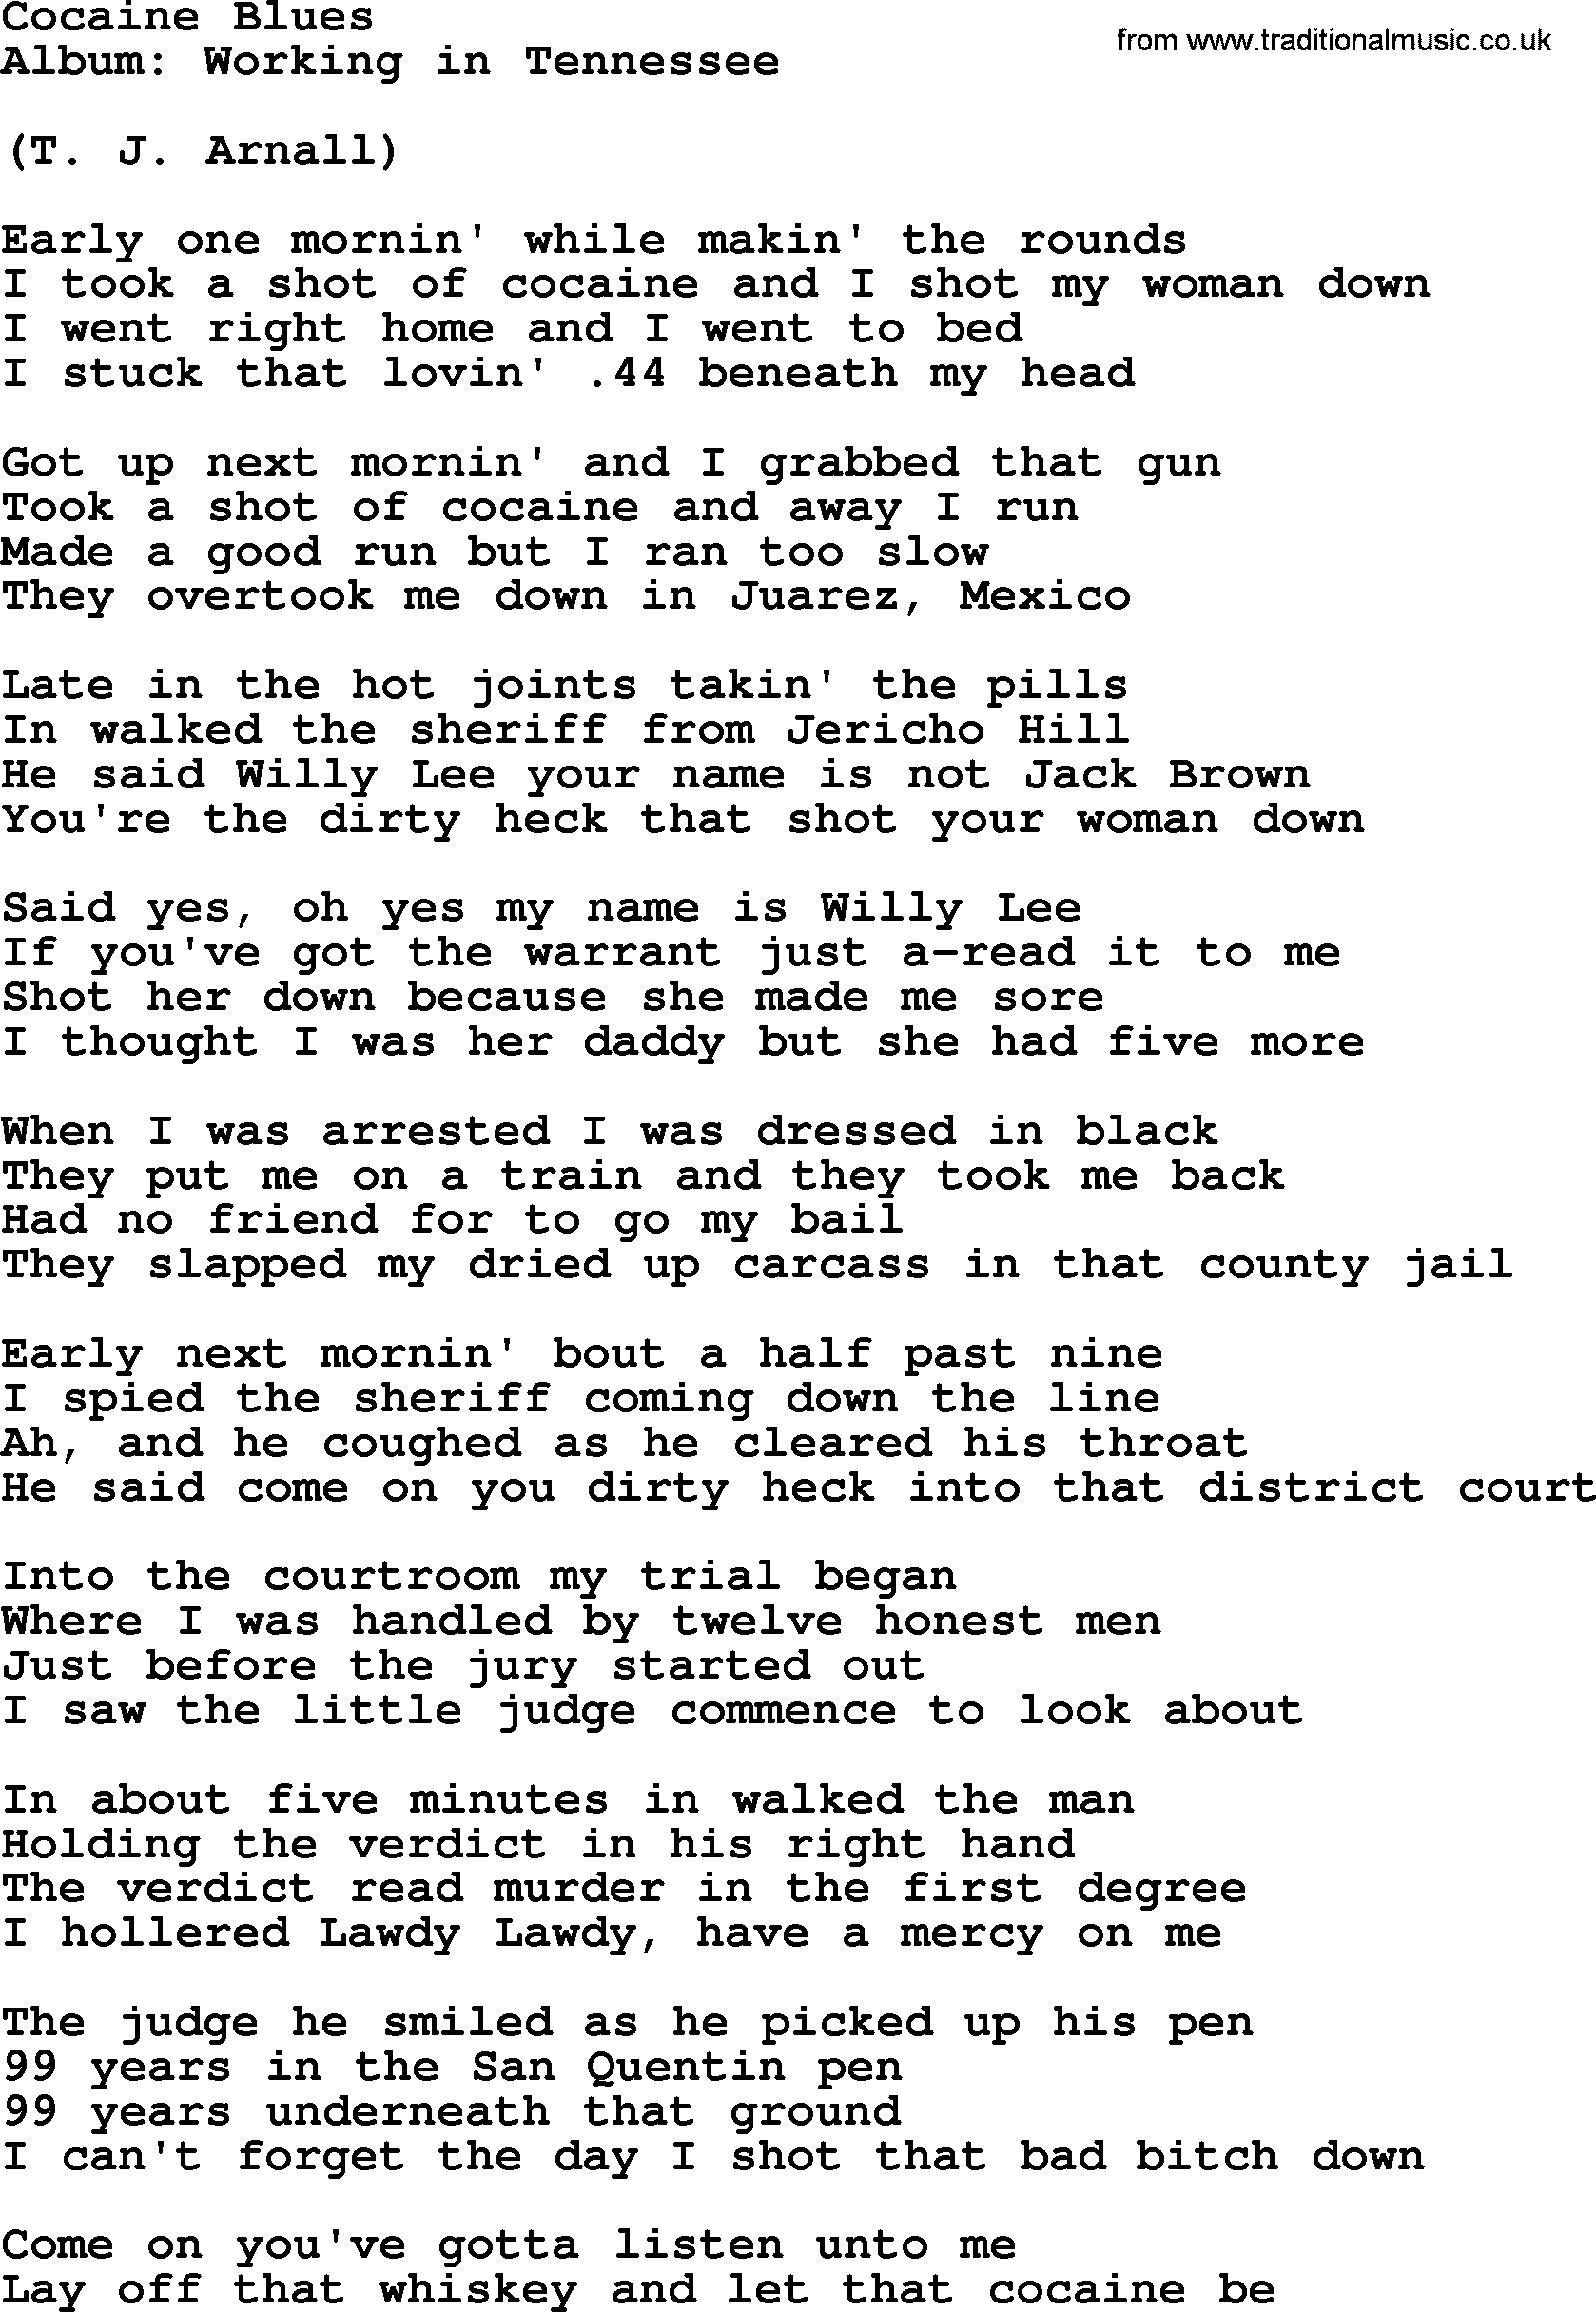 Merle Haggard song: Cocaine Blues, lyrics.